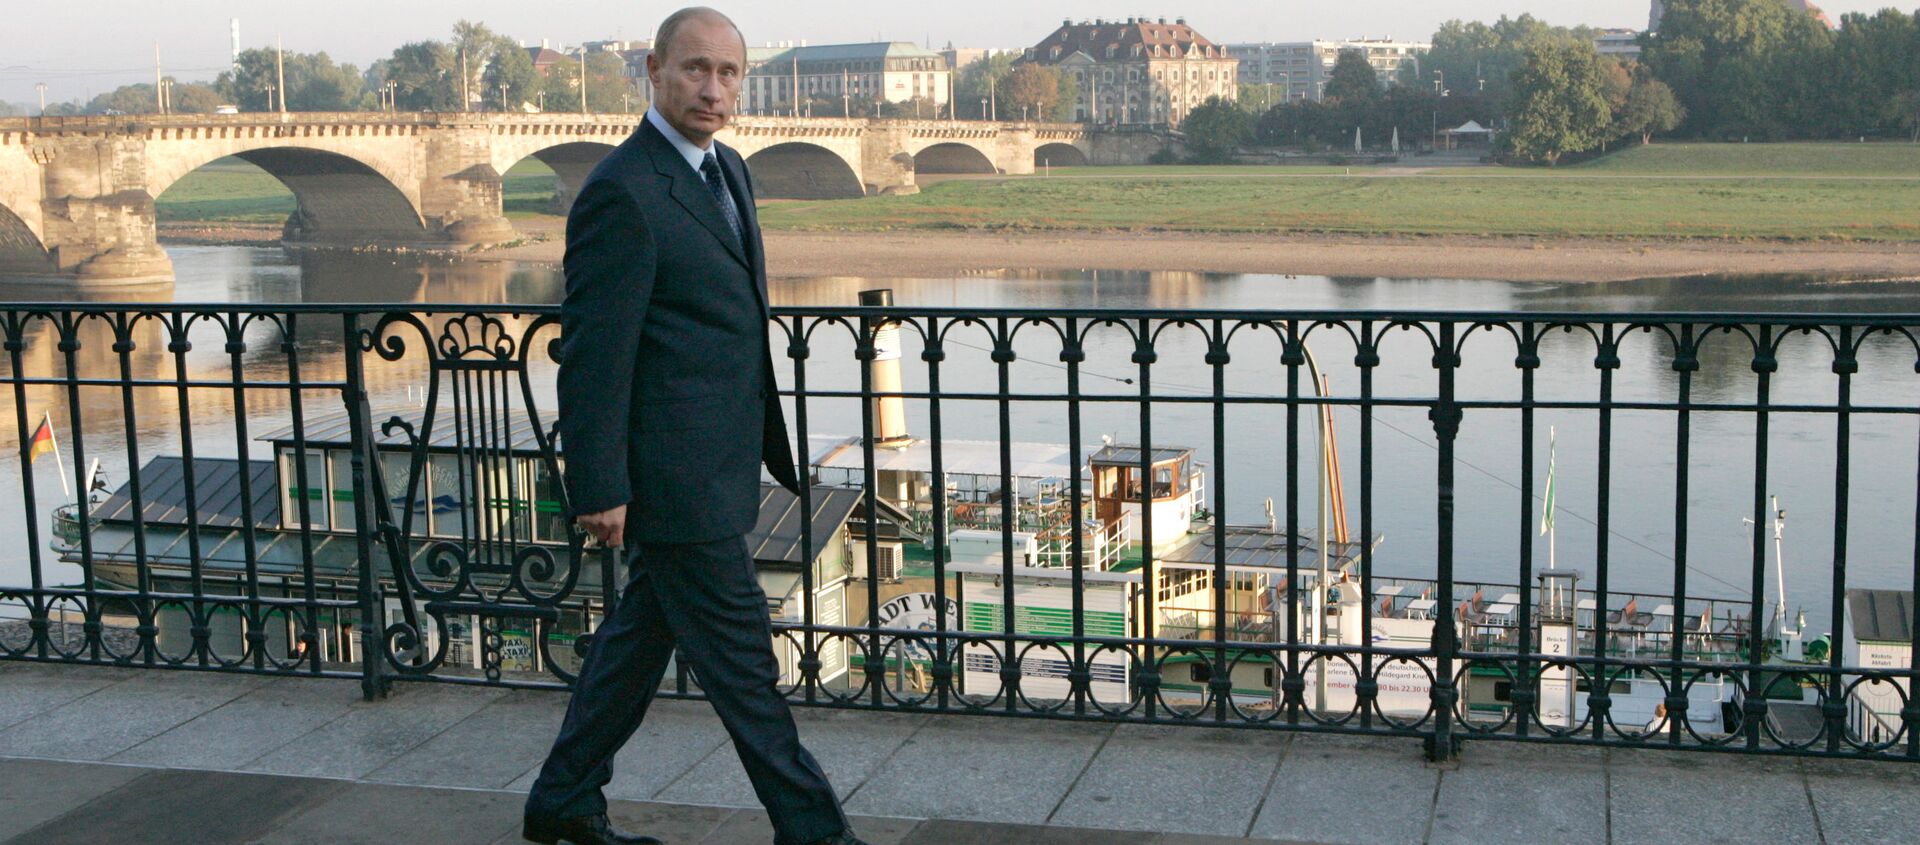 Vladímir Putin, presidente de Rusia, en Dresde, Alemania (archivo) - Sputnik Mundo, 1920, 15.03.2018